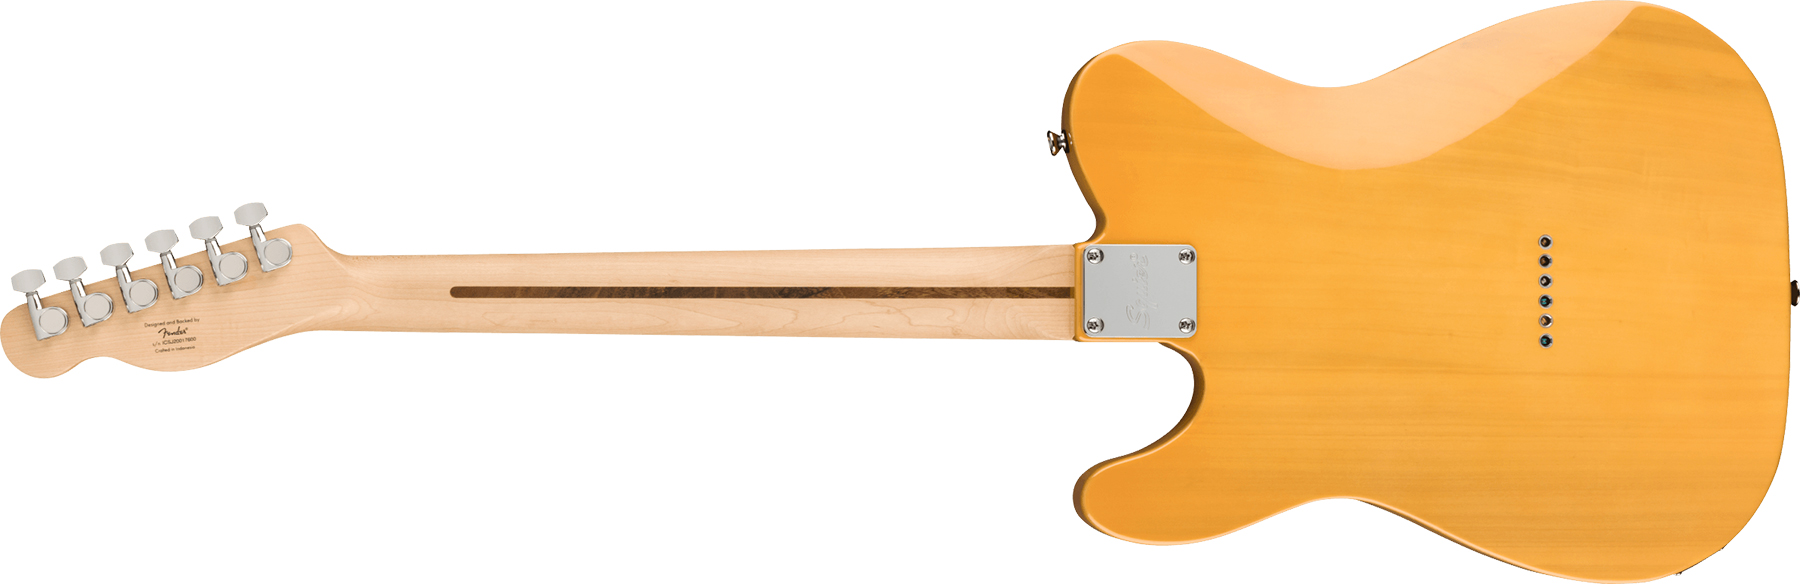 Squier Tele Affinity 2021 2s Mn - Butterscotch Blonde - Tel shape electric guitar - Variation 1